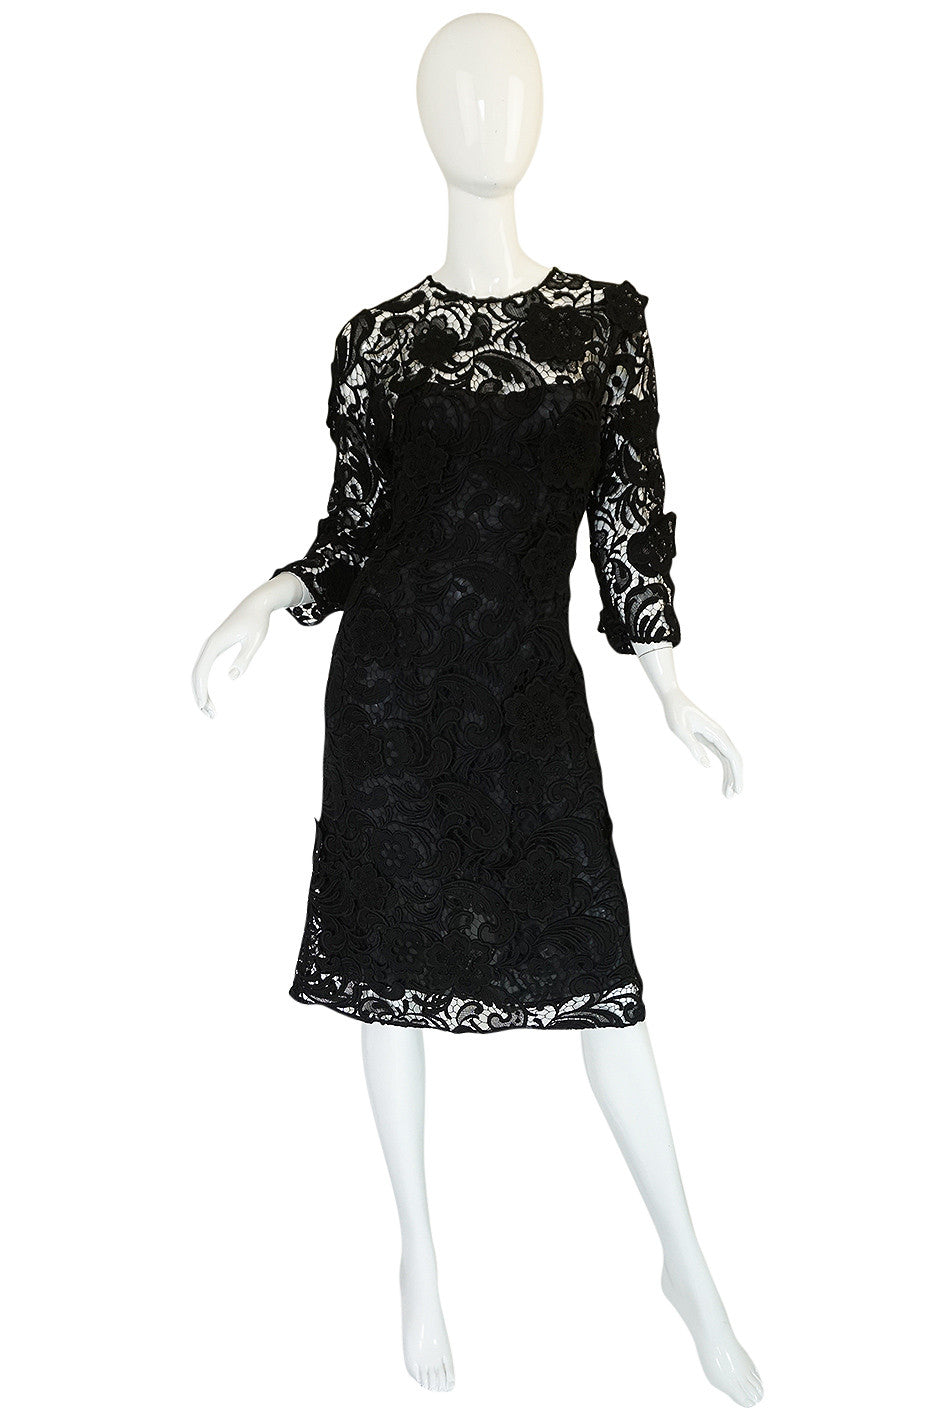 F/W 2008 Prada Runway Wait Listed Black Lace Dress – Shrimpton Couture